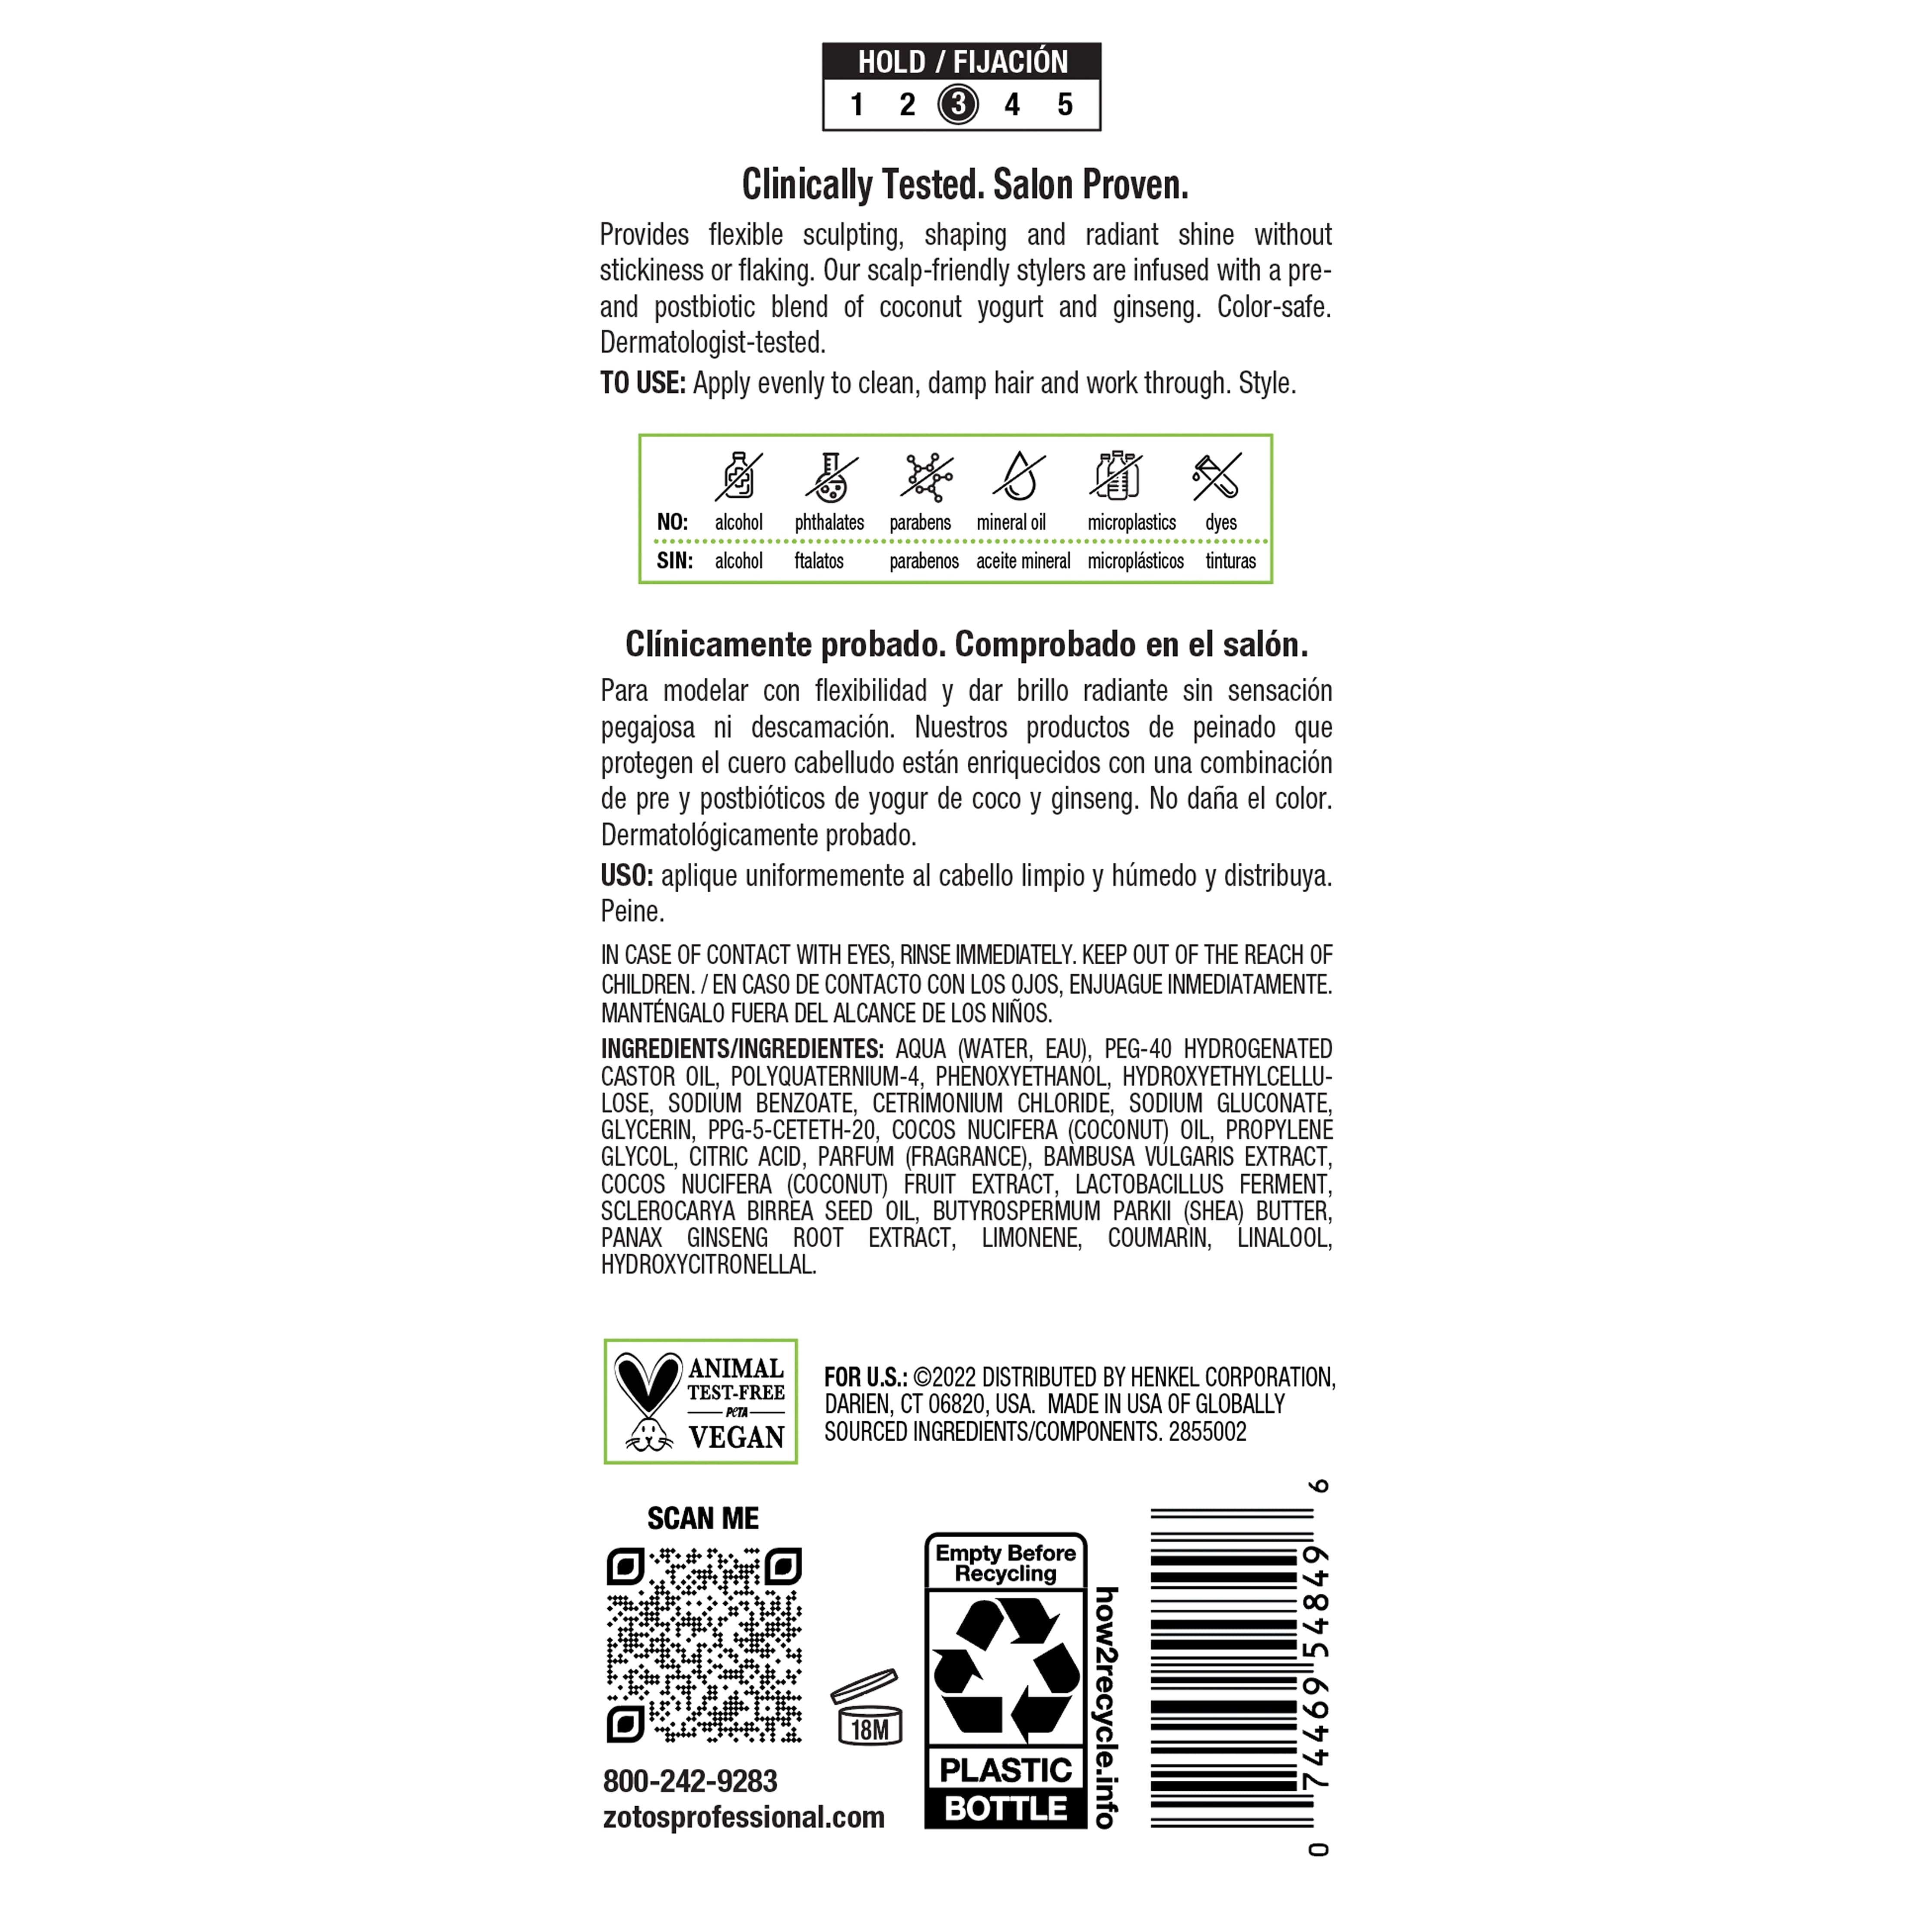 Biotera Alcohol-free defining gel description